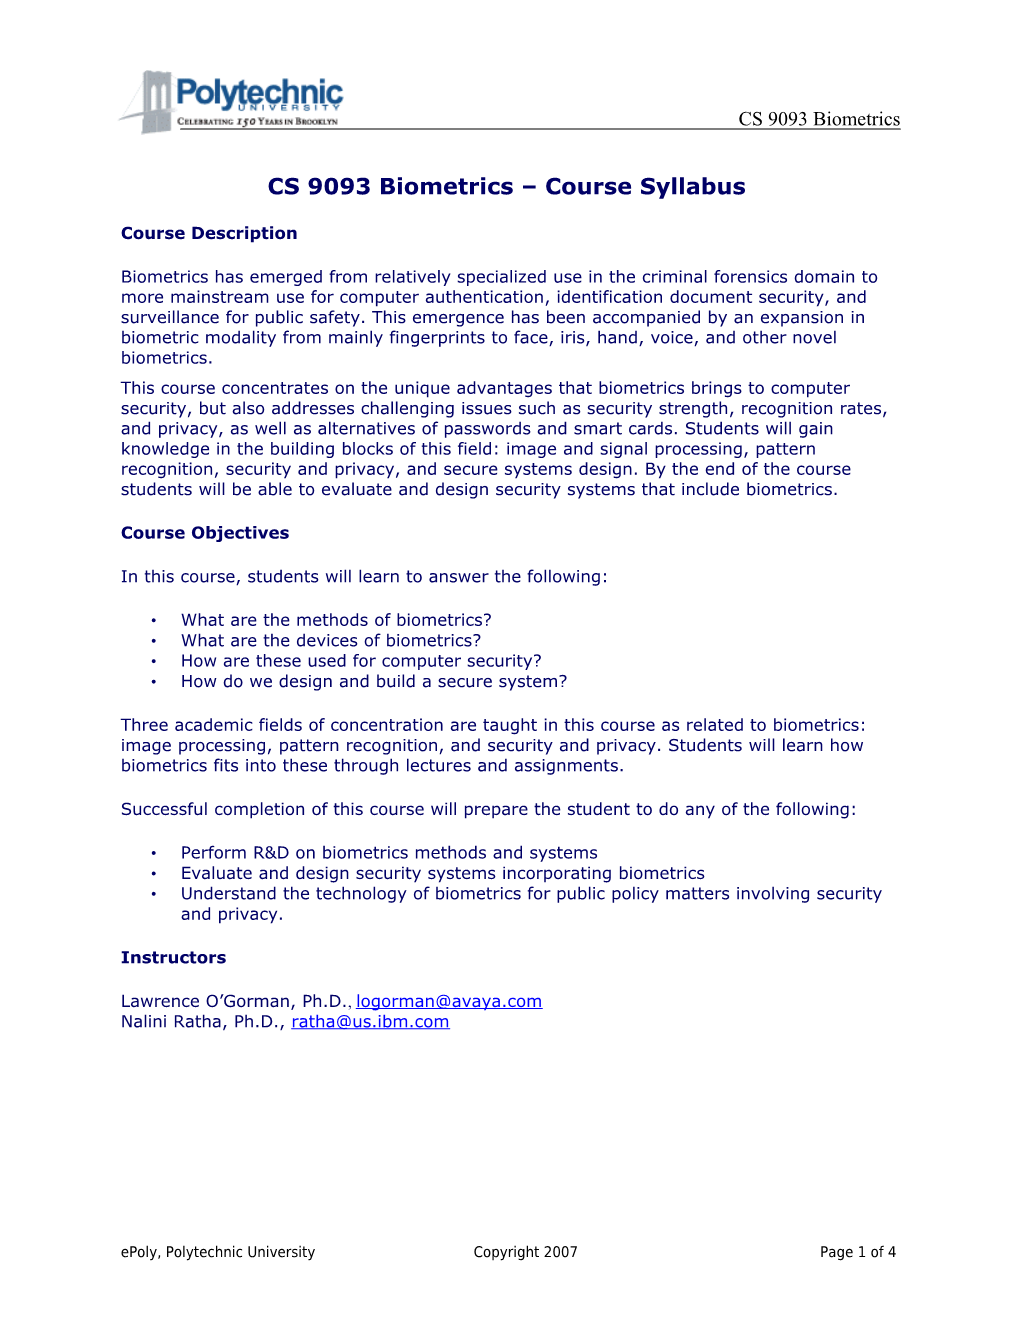 CS 9093 Biometrics Course Syllabus